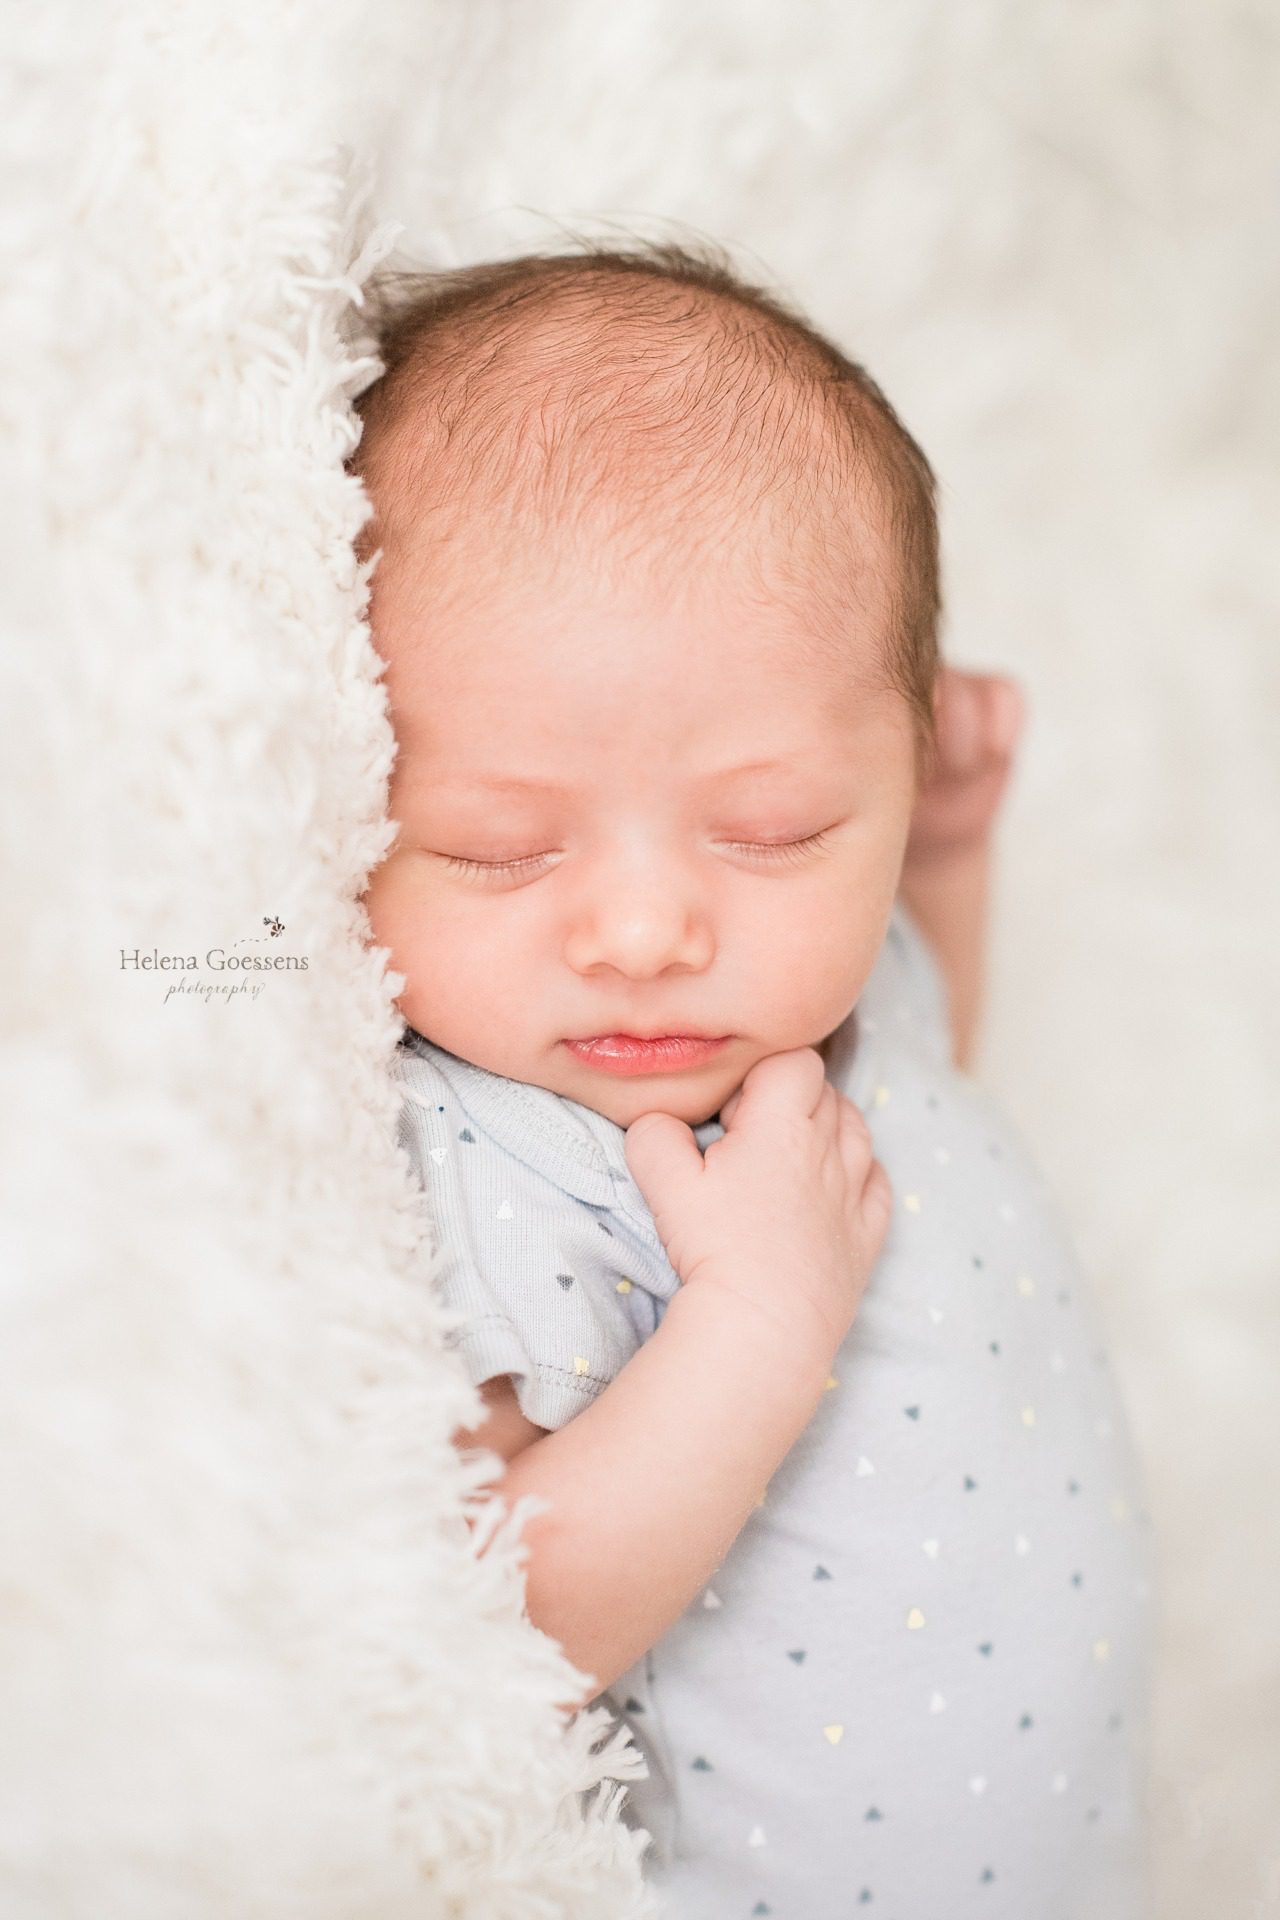 Boston MA newborn photographer Helena Goessens captures baby during lifestyle session